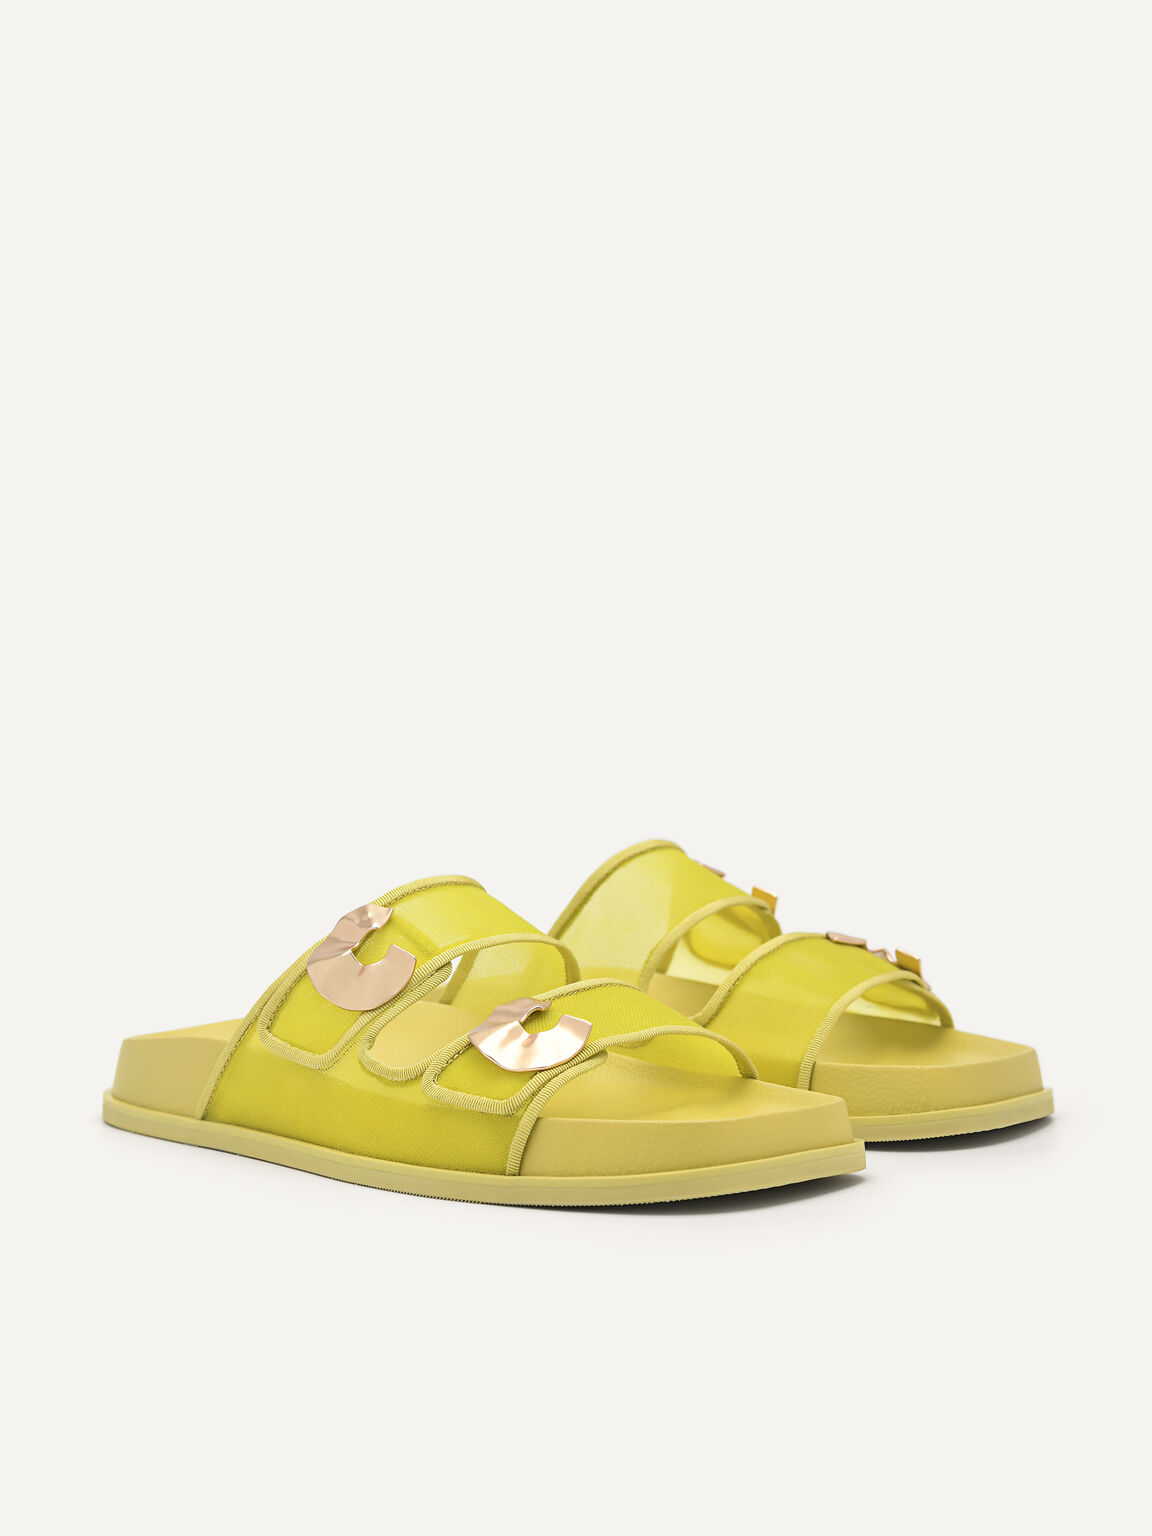 Iris Strap Sandals, Yellow, hi-res